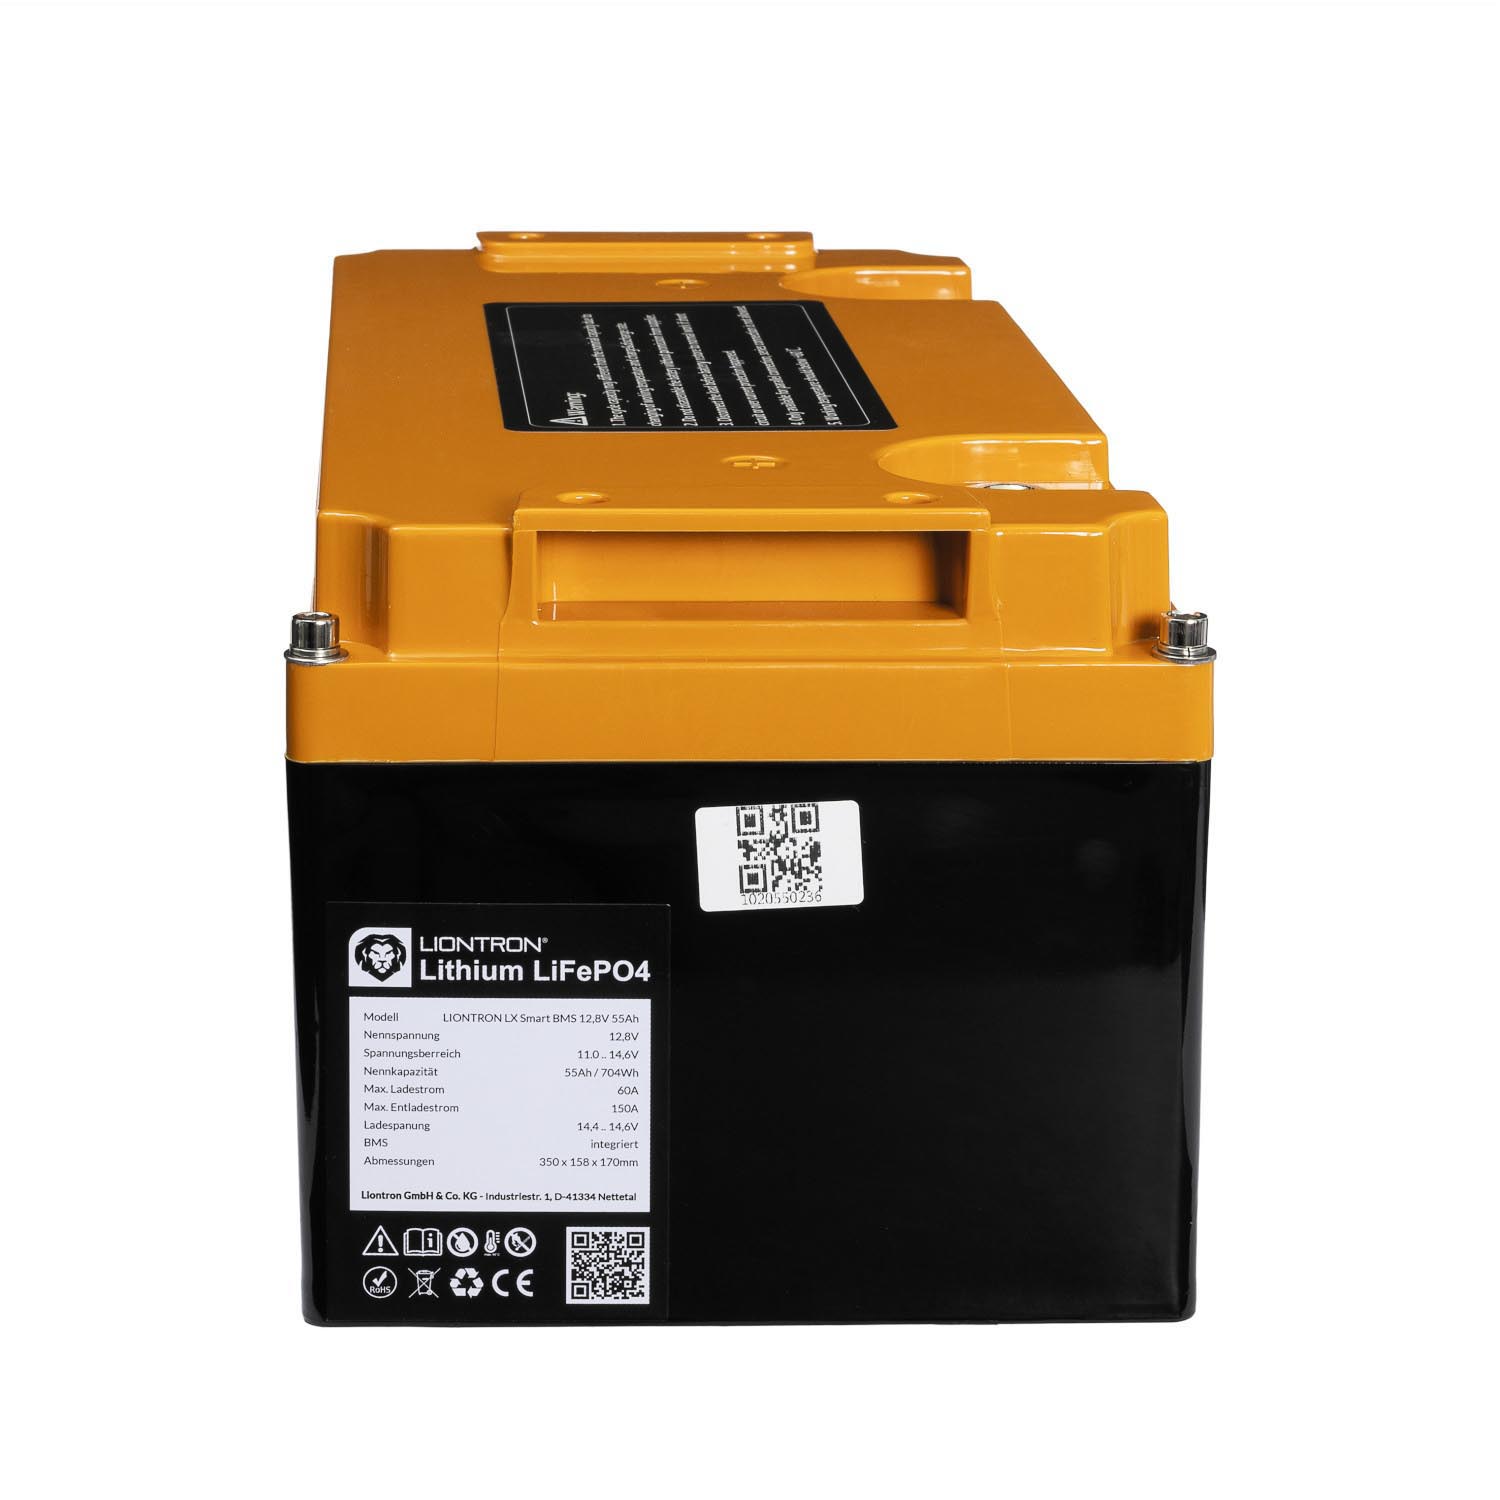 Liontron 55Ah 12V LiFePO4 Lithium Batterie Wohnmobil BMS mit App (USt-befreit nach §12 Abs.3 Nr. 1 S.1 UStG)